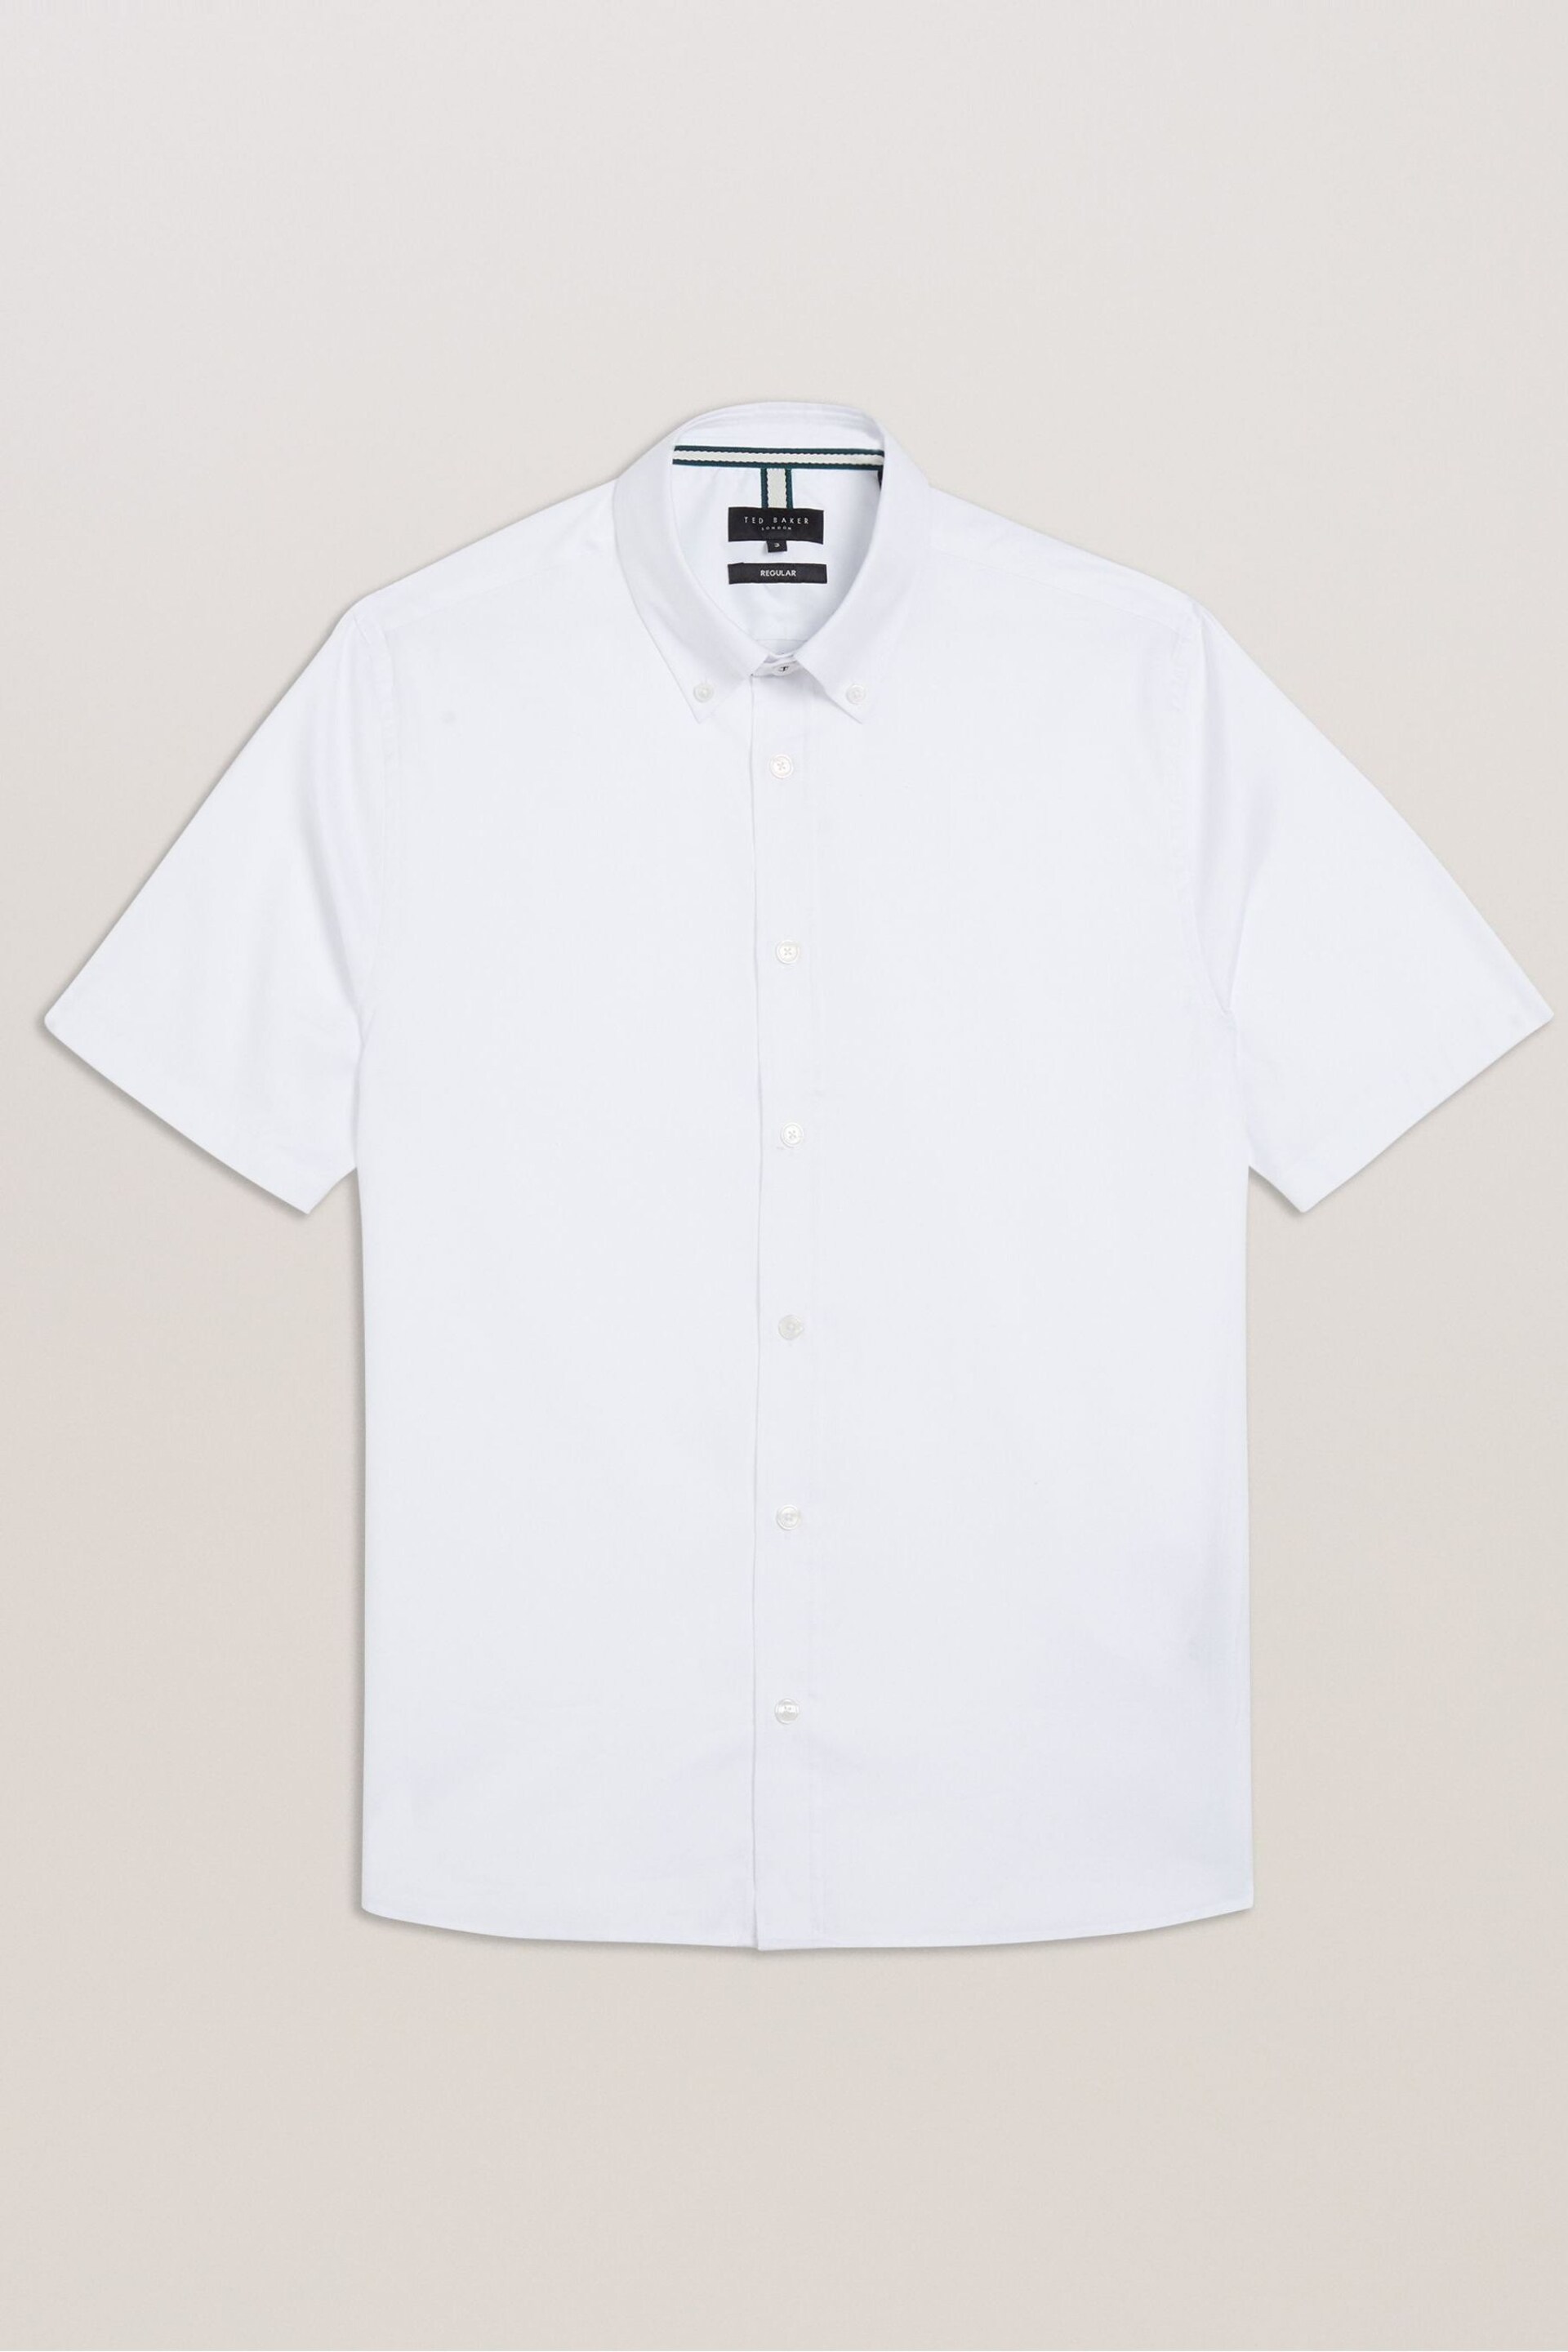 Ted Baker White Regular Aldgte Premium Oxford Shirt - Image 3 of 5